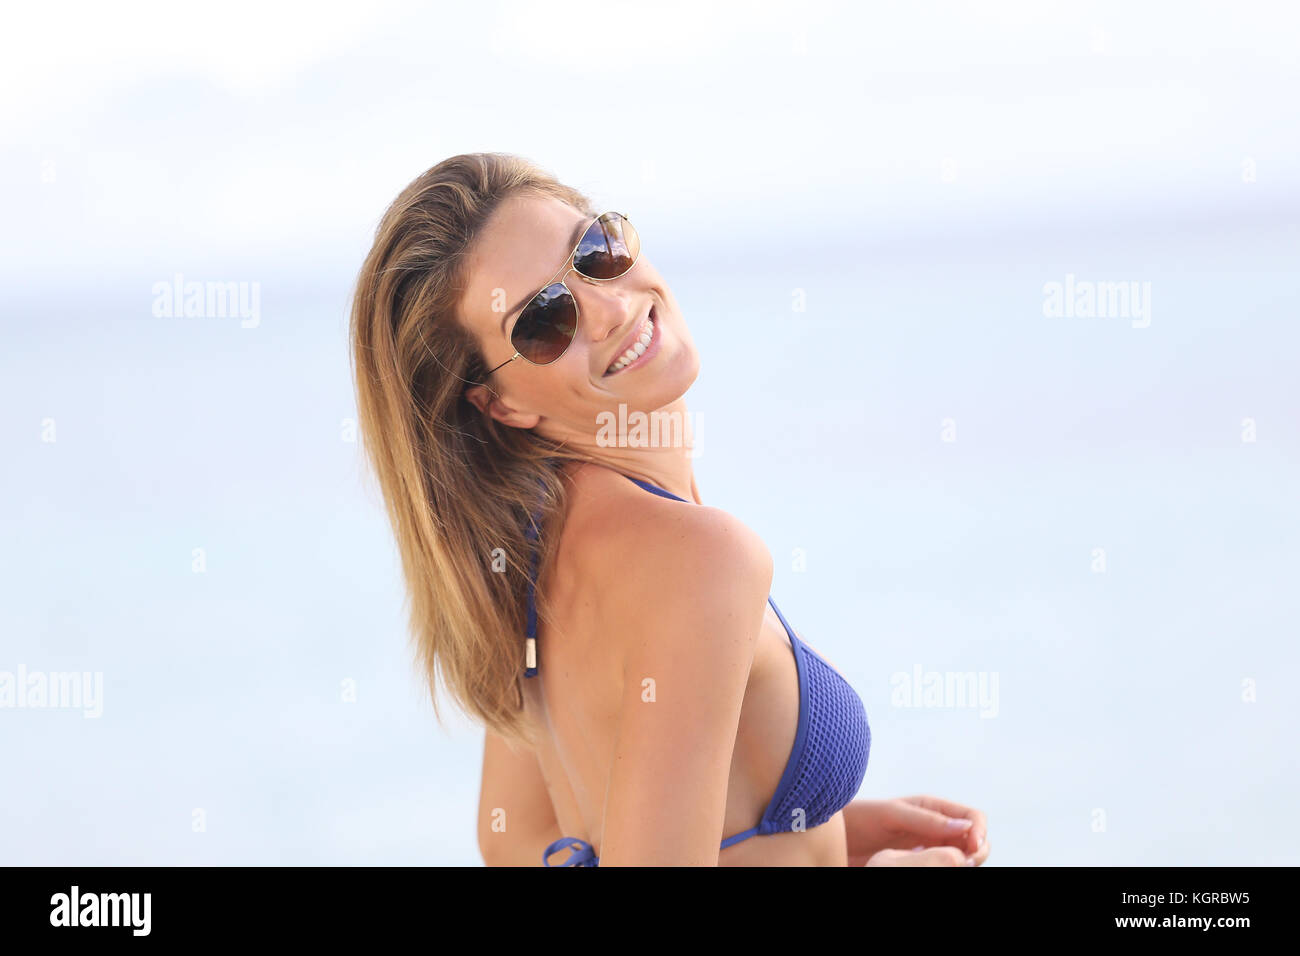 Young Woman White Tiny Bikini Posing Stock Photo 1110229964